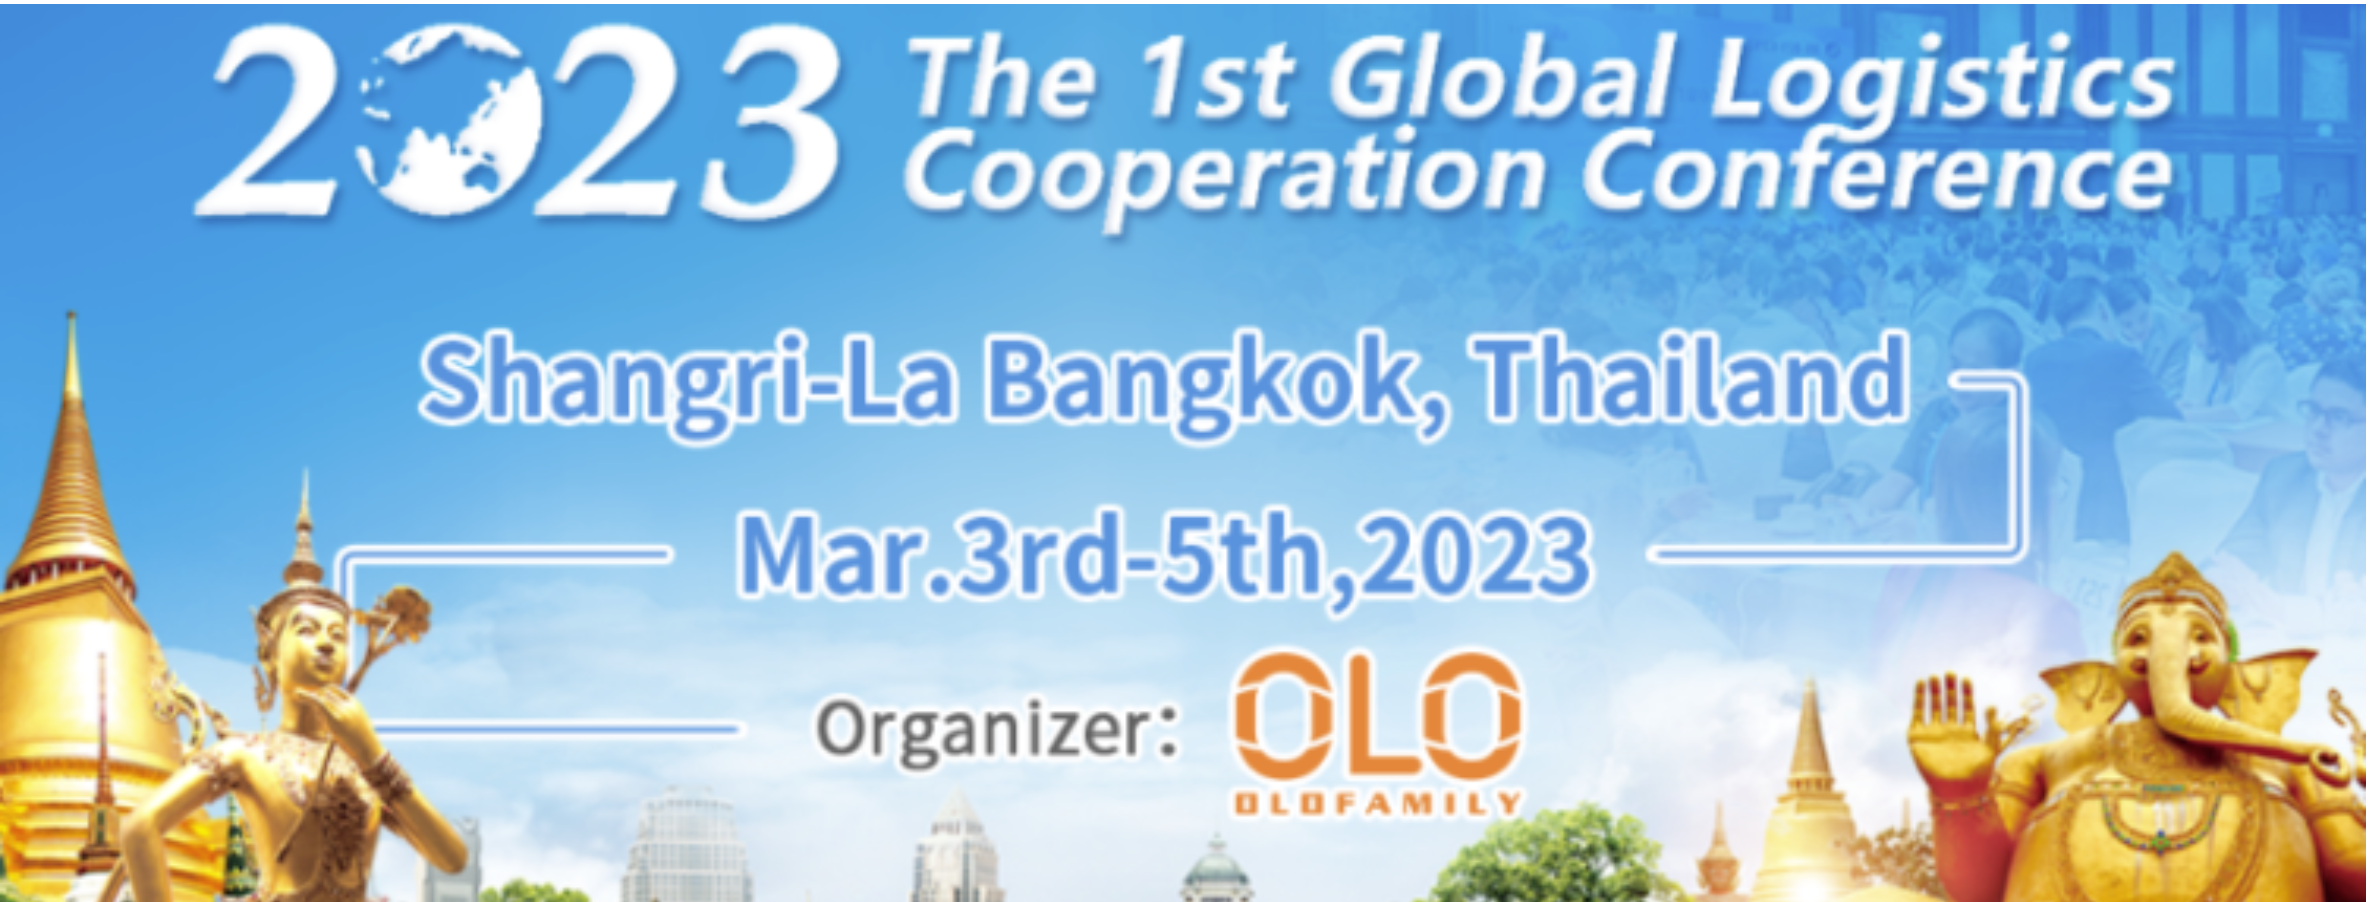 [SUPPORT MEDIA] - [03-05/03/2023] Invitation- 2023 Global Logistics Cooperation Conference